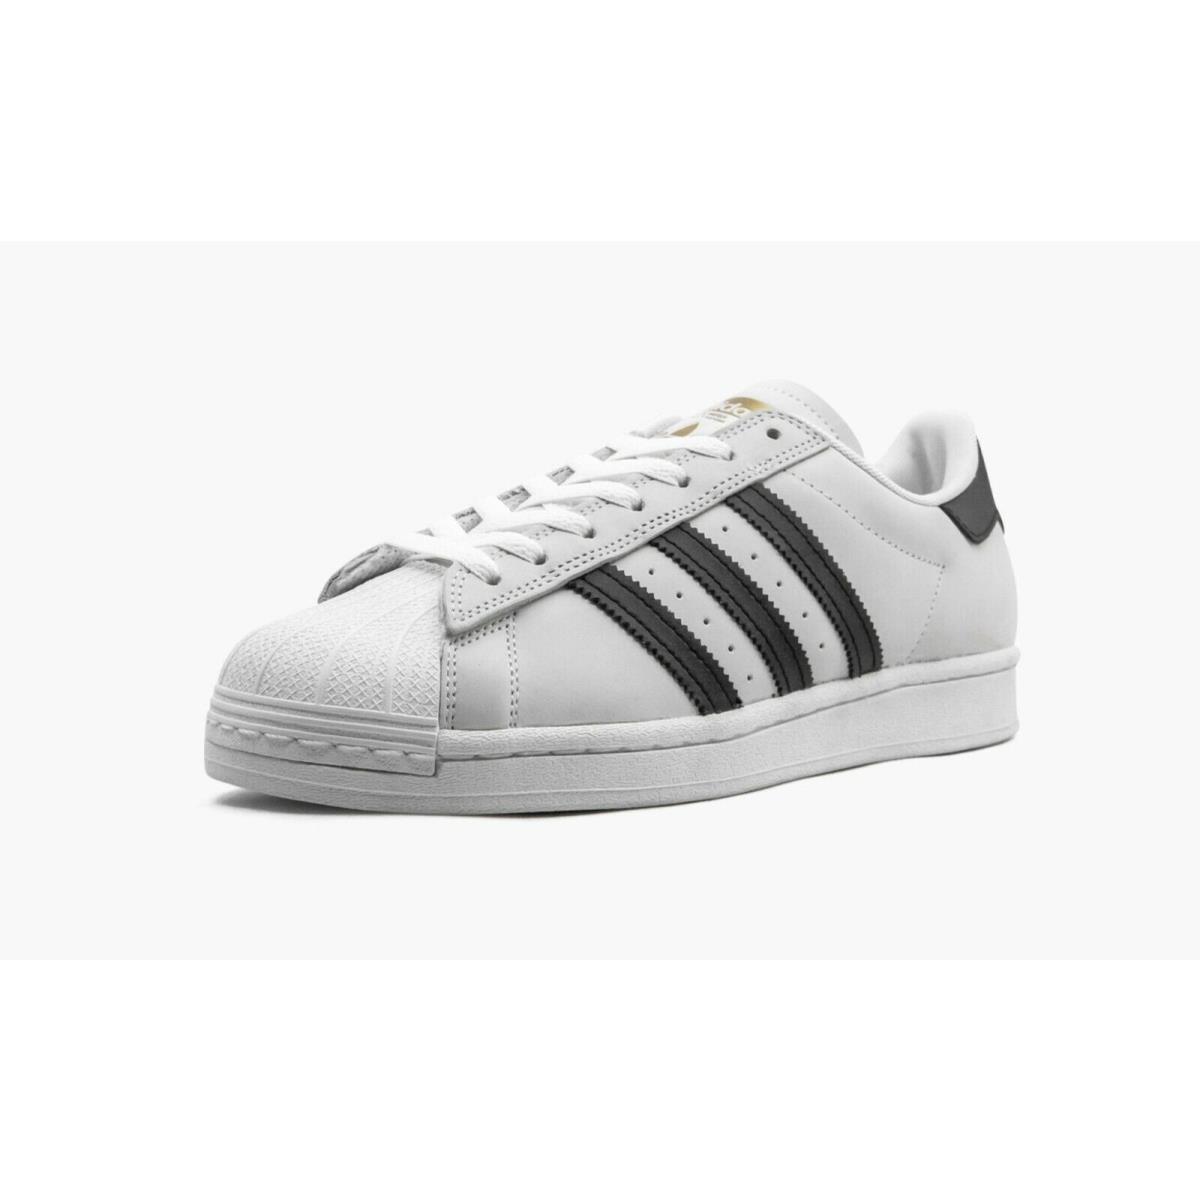 Adidas shoes SUPERSTAR ADV - WHITE/BLACK/GOLD 2